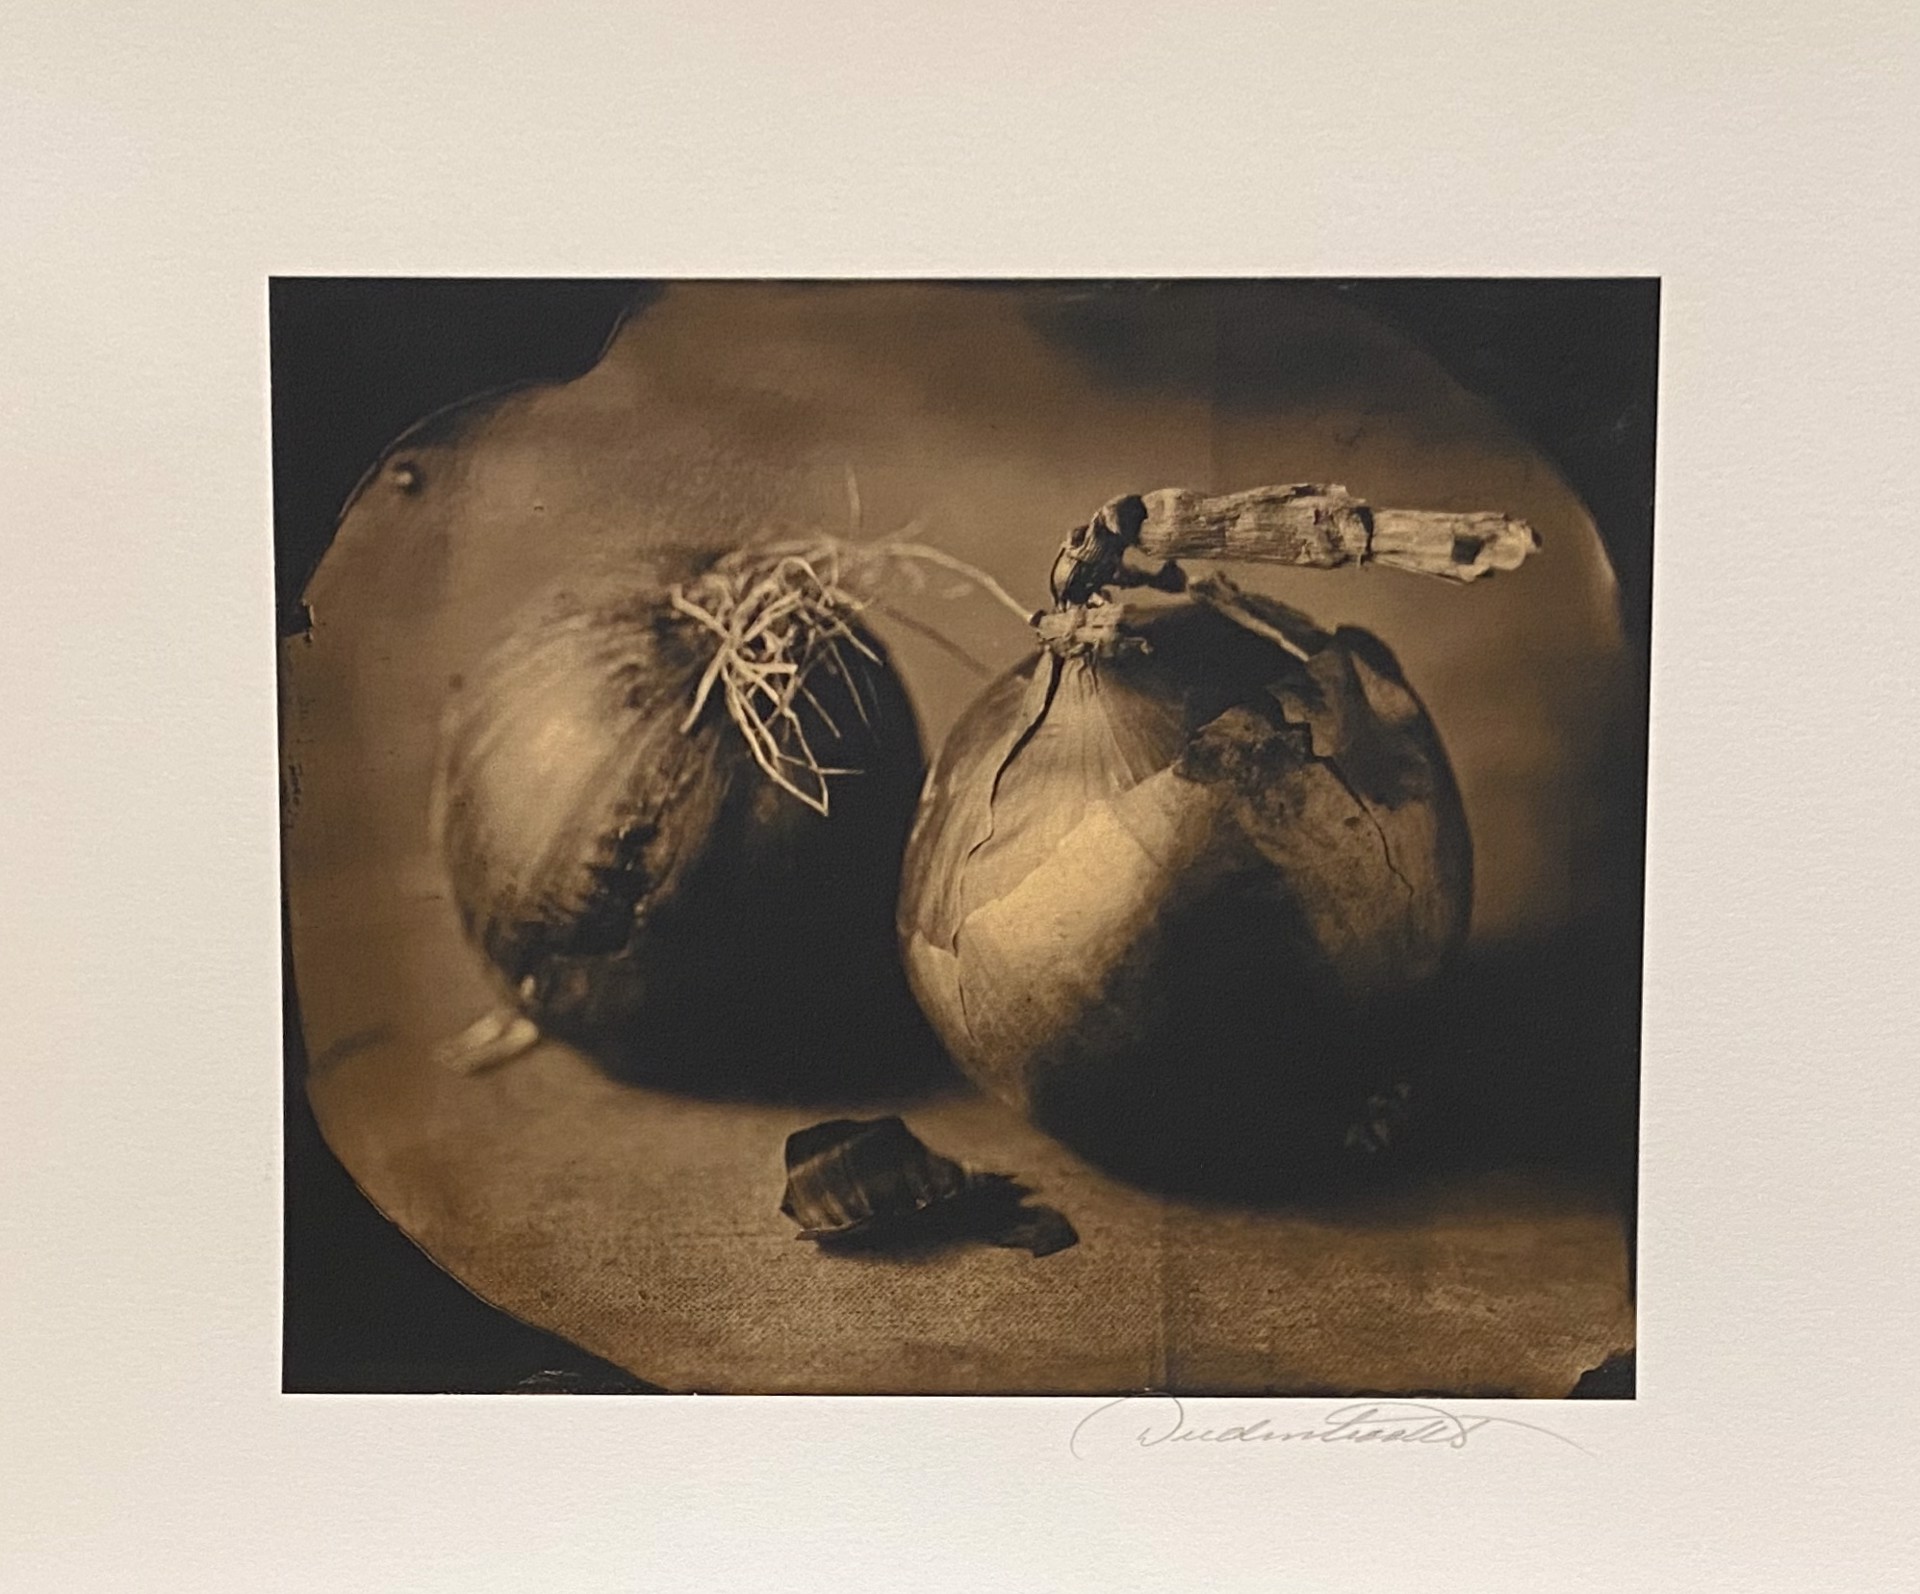 Onions by Don Dudenbostel